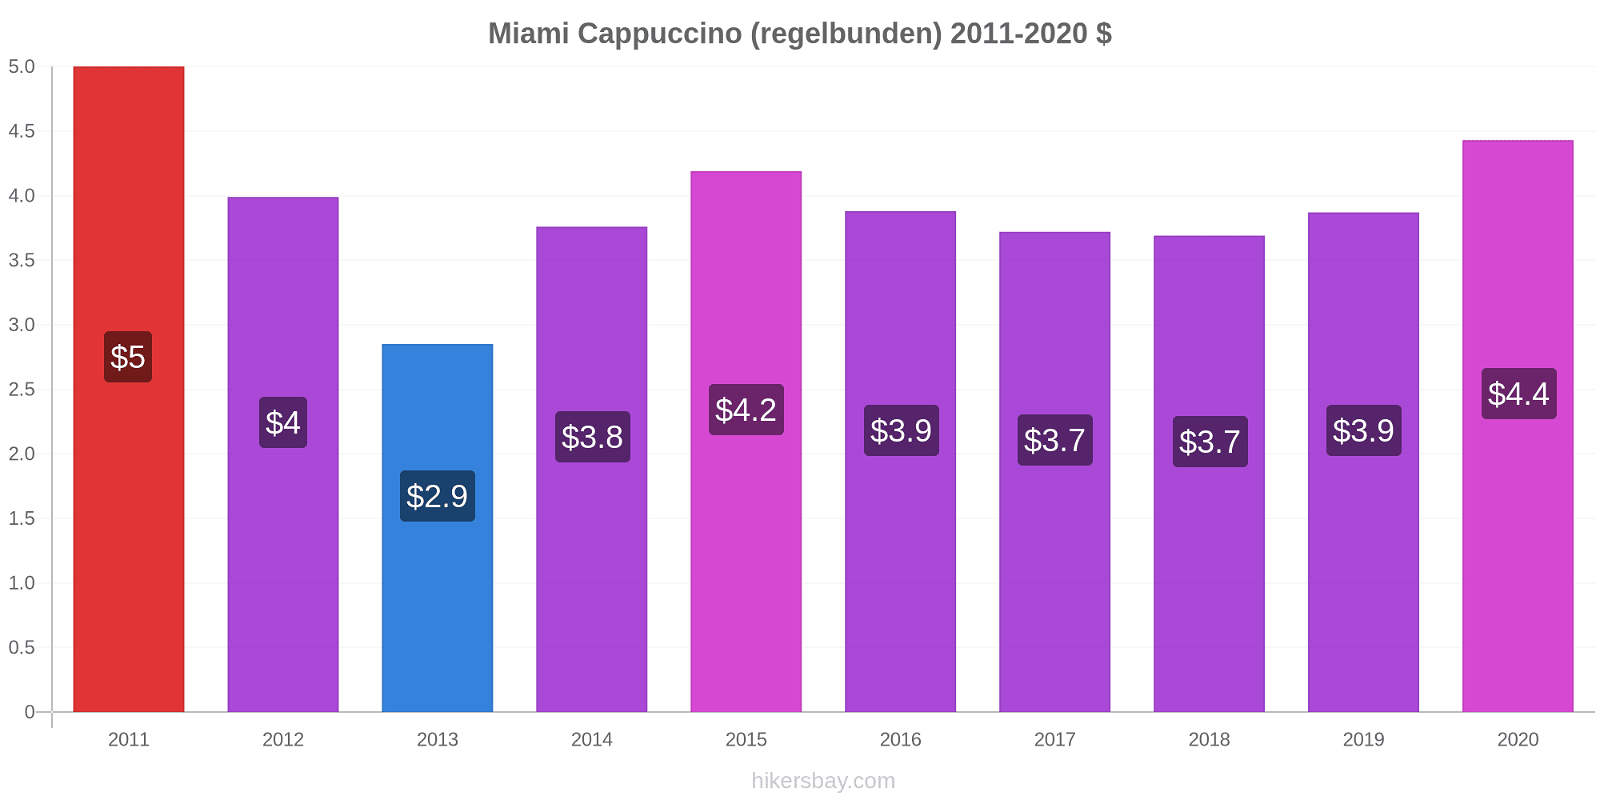 Miami prisförändringar Cappuccino (regelbunden) hikersbay.com